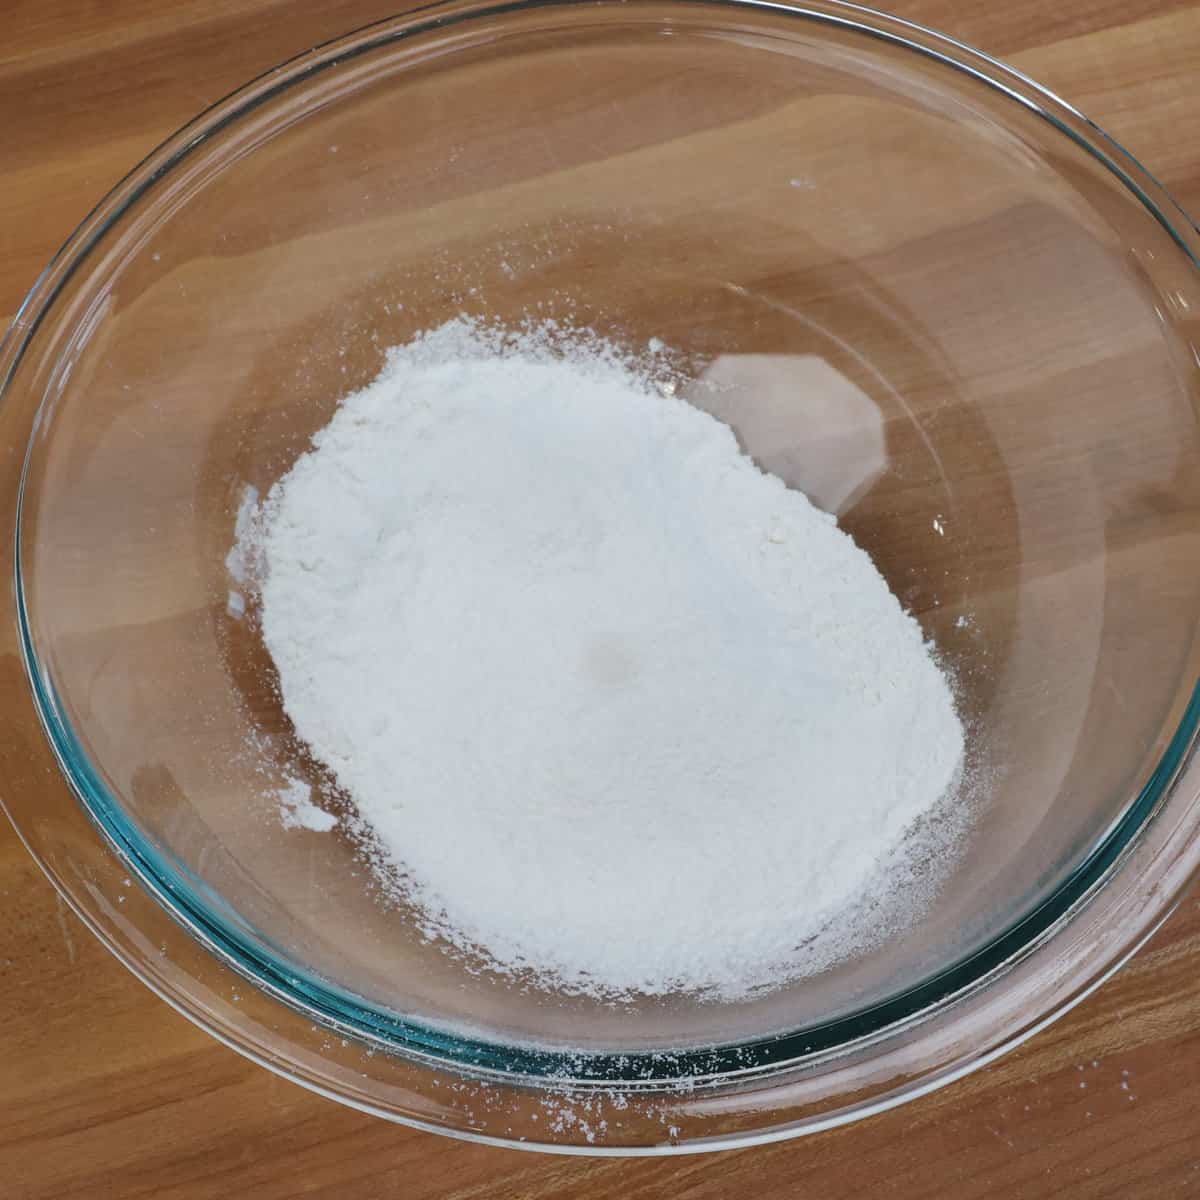 flour, baking soda, baking powder, and salt in a mixing bowl.